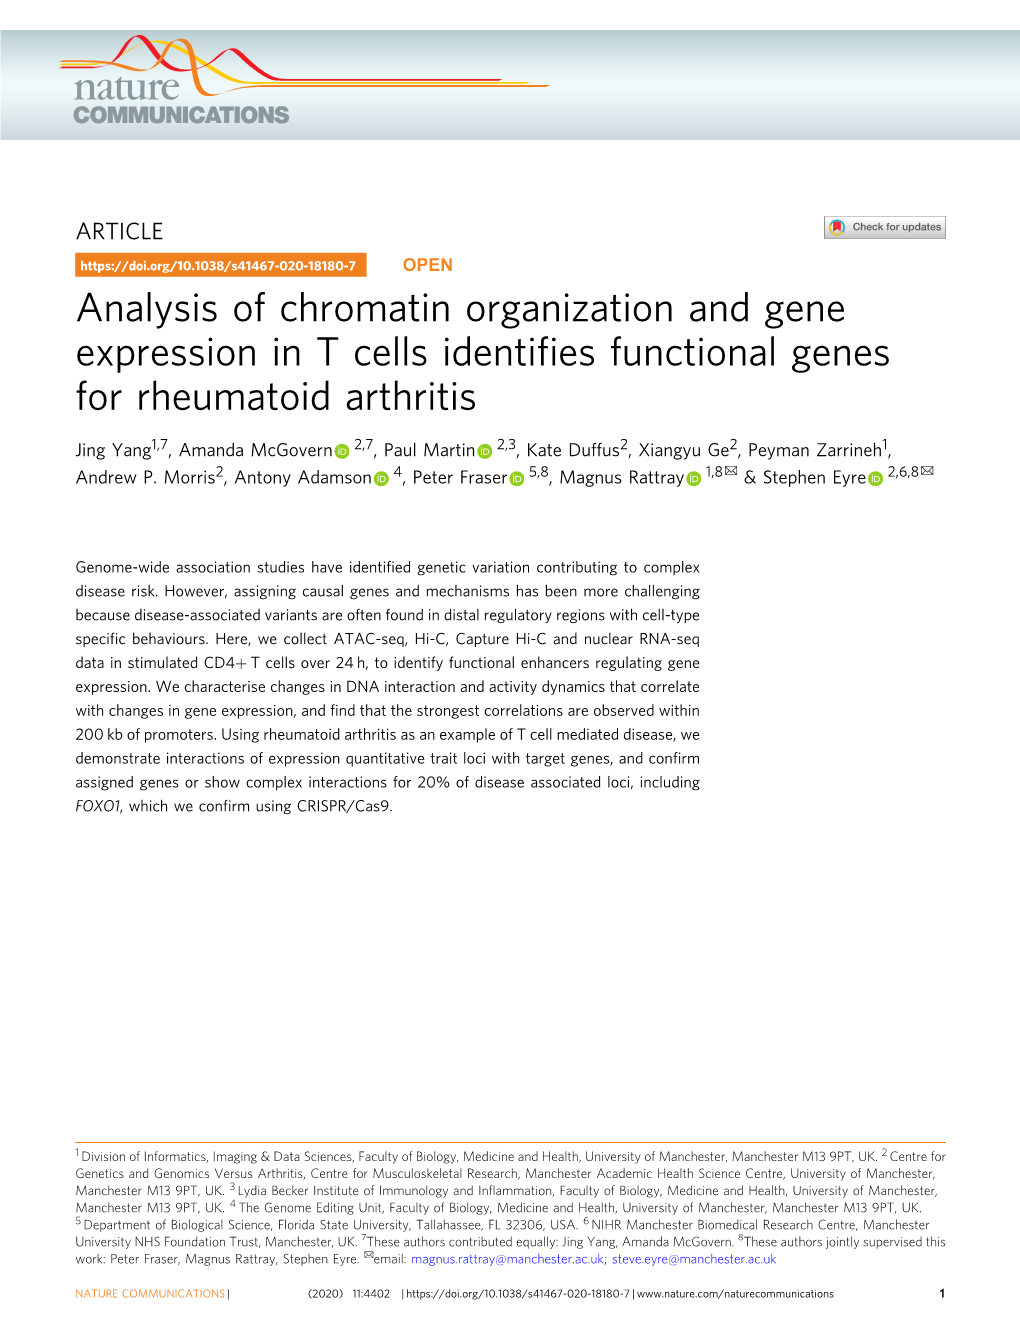 Analysis of Chromatin Organization and Gene Expression in T Cells Identiﬁes Functional Genes for Rheumatoid Arthritis